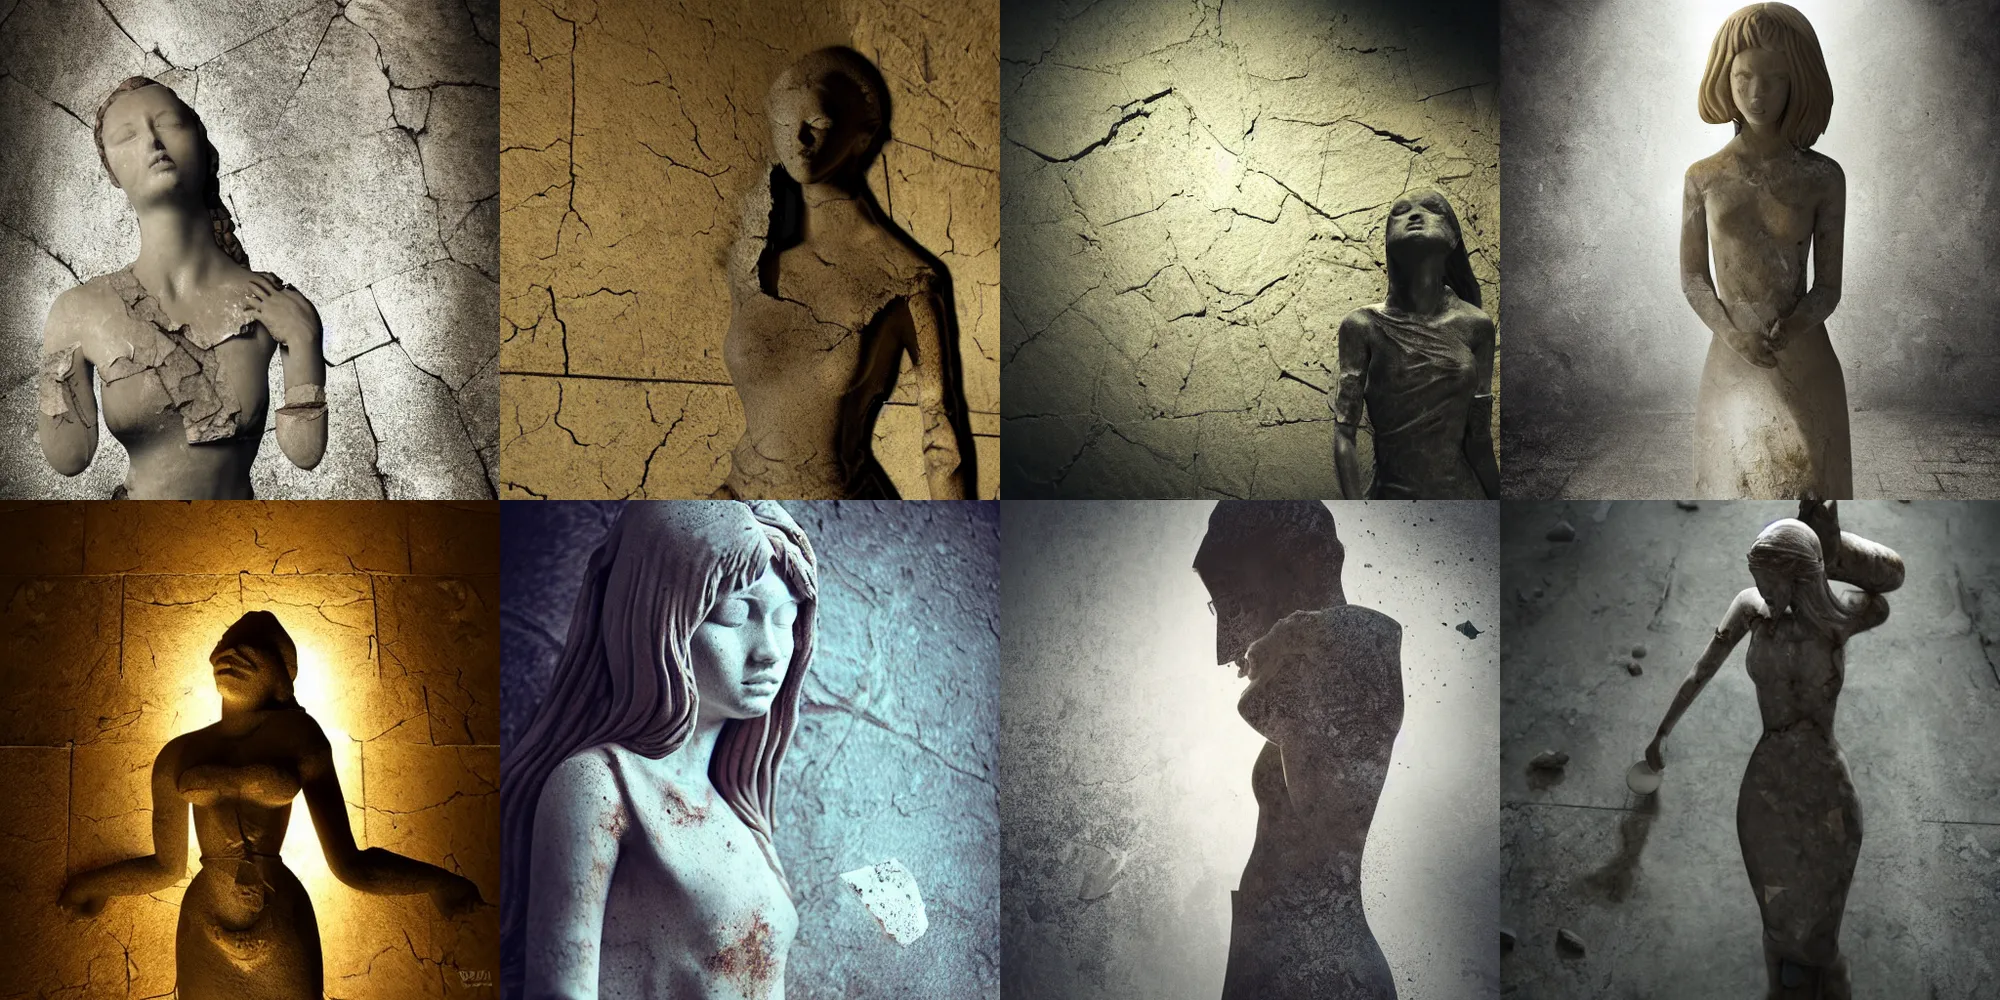 Prompt: breaking statue of girl, real girl underneath, shattered crumbling plaster, stone dust, escaping, stone tile hallway, fantasy art, 4 k, dramatic lighting, trending deviantart